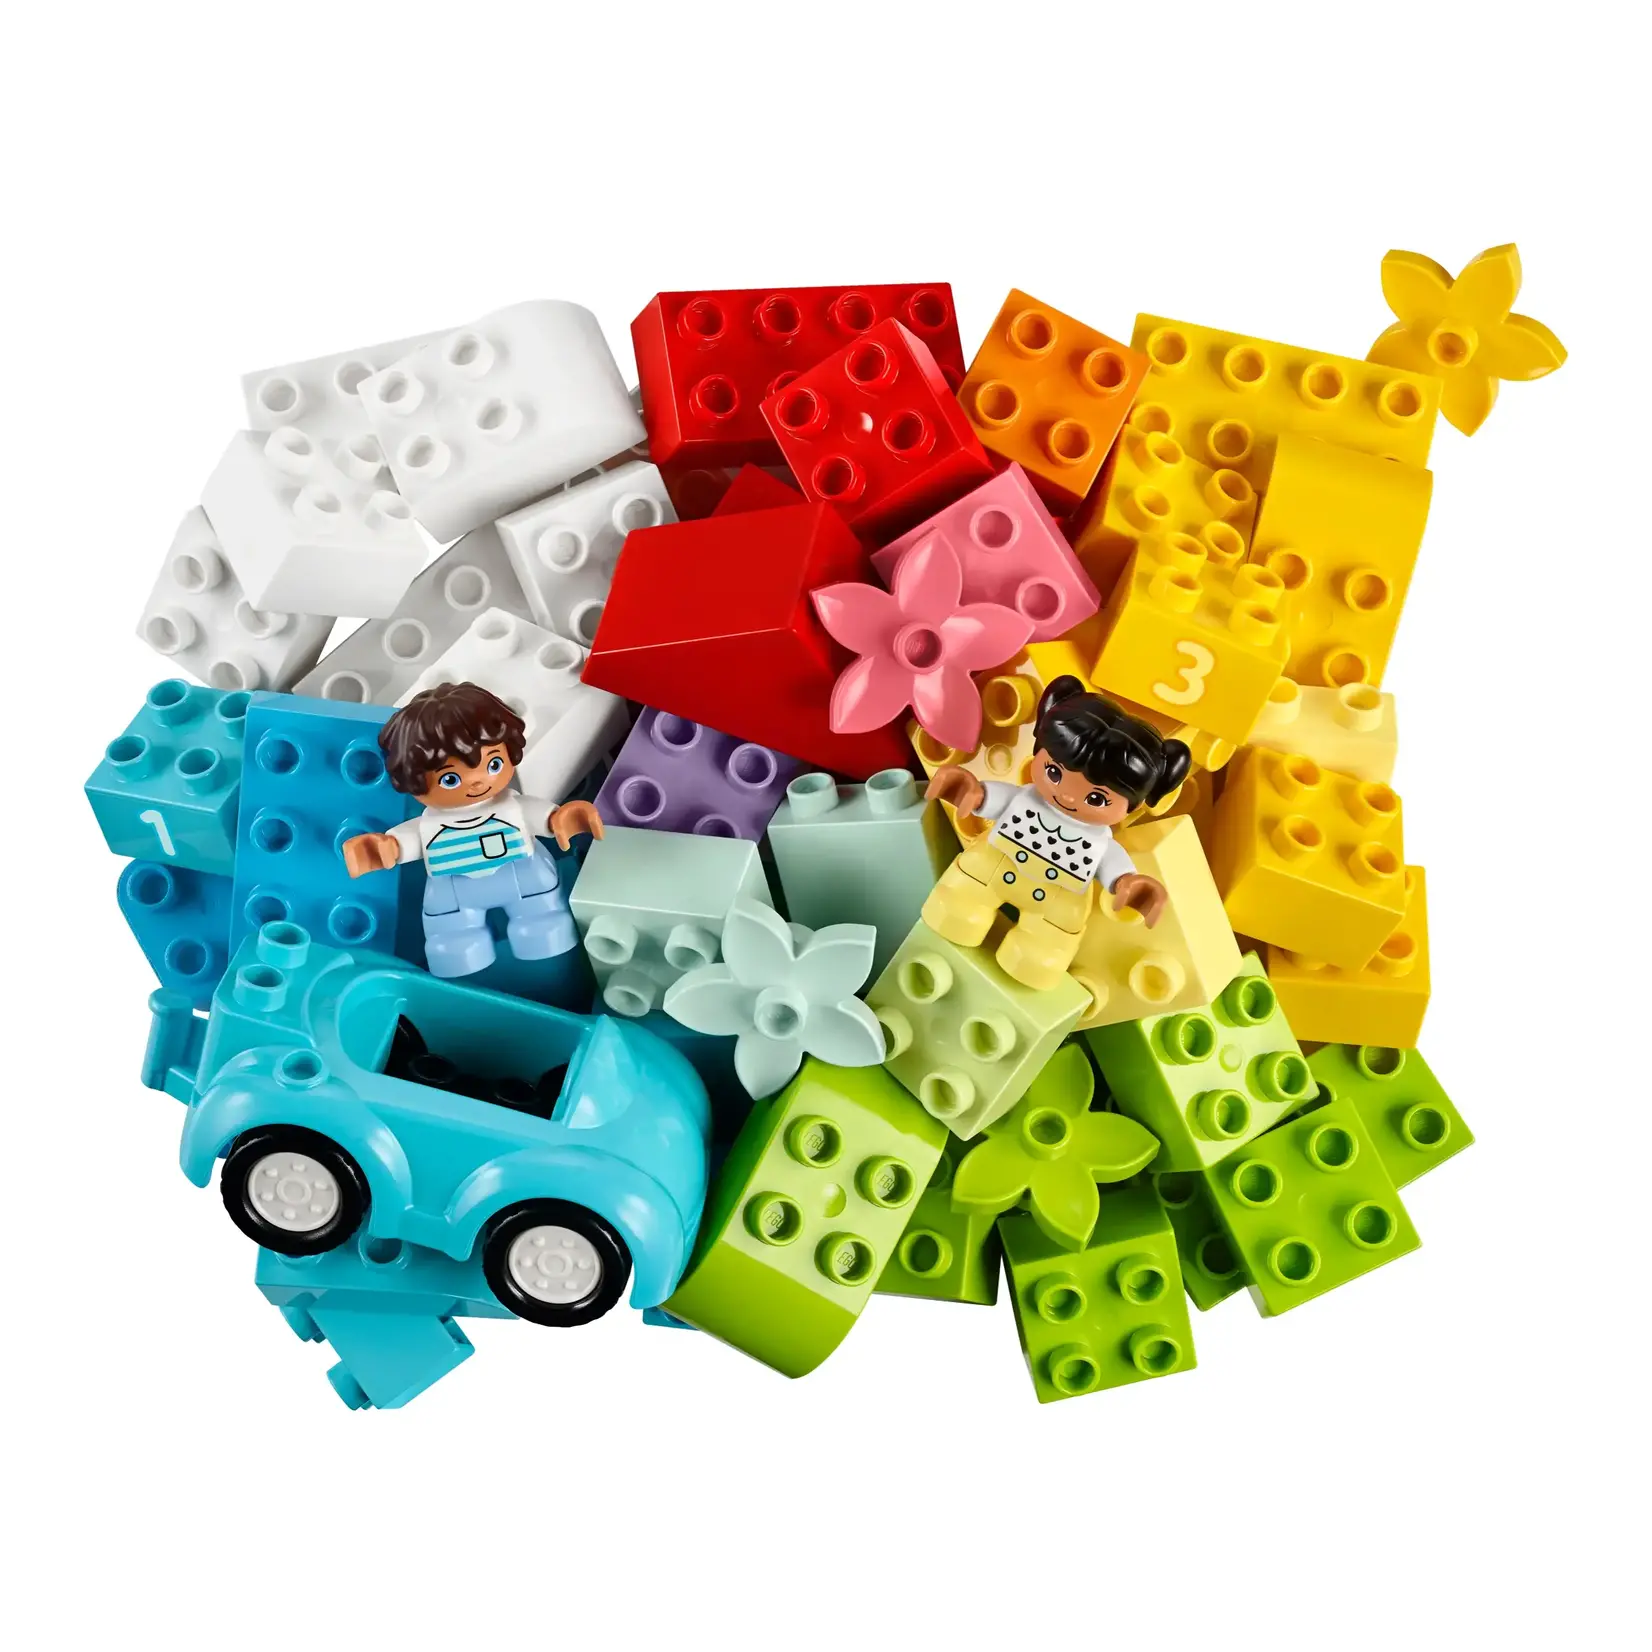 LEGO 10913 DUPLO BRICK BOX